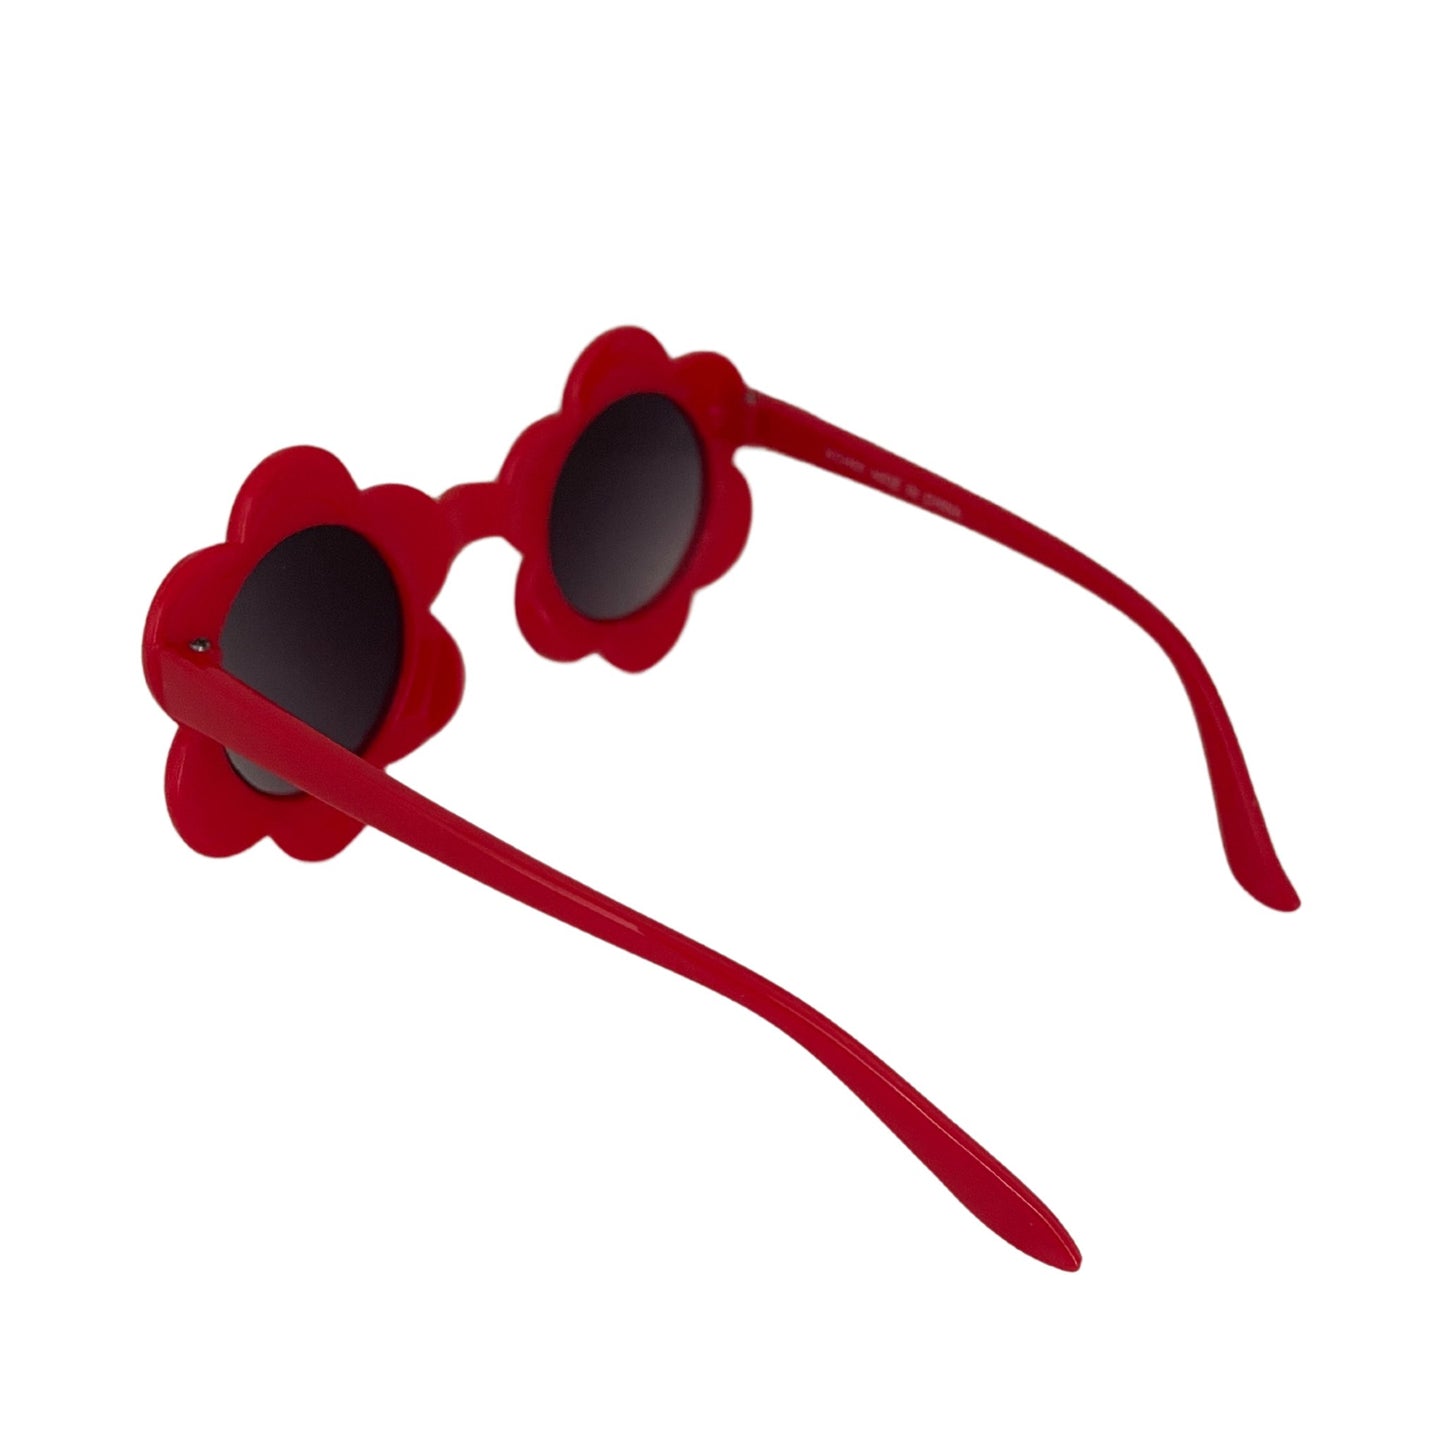 Kids Round Flower Sunglasses - Pretty Poppy